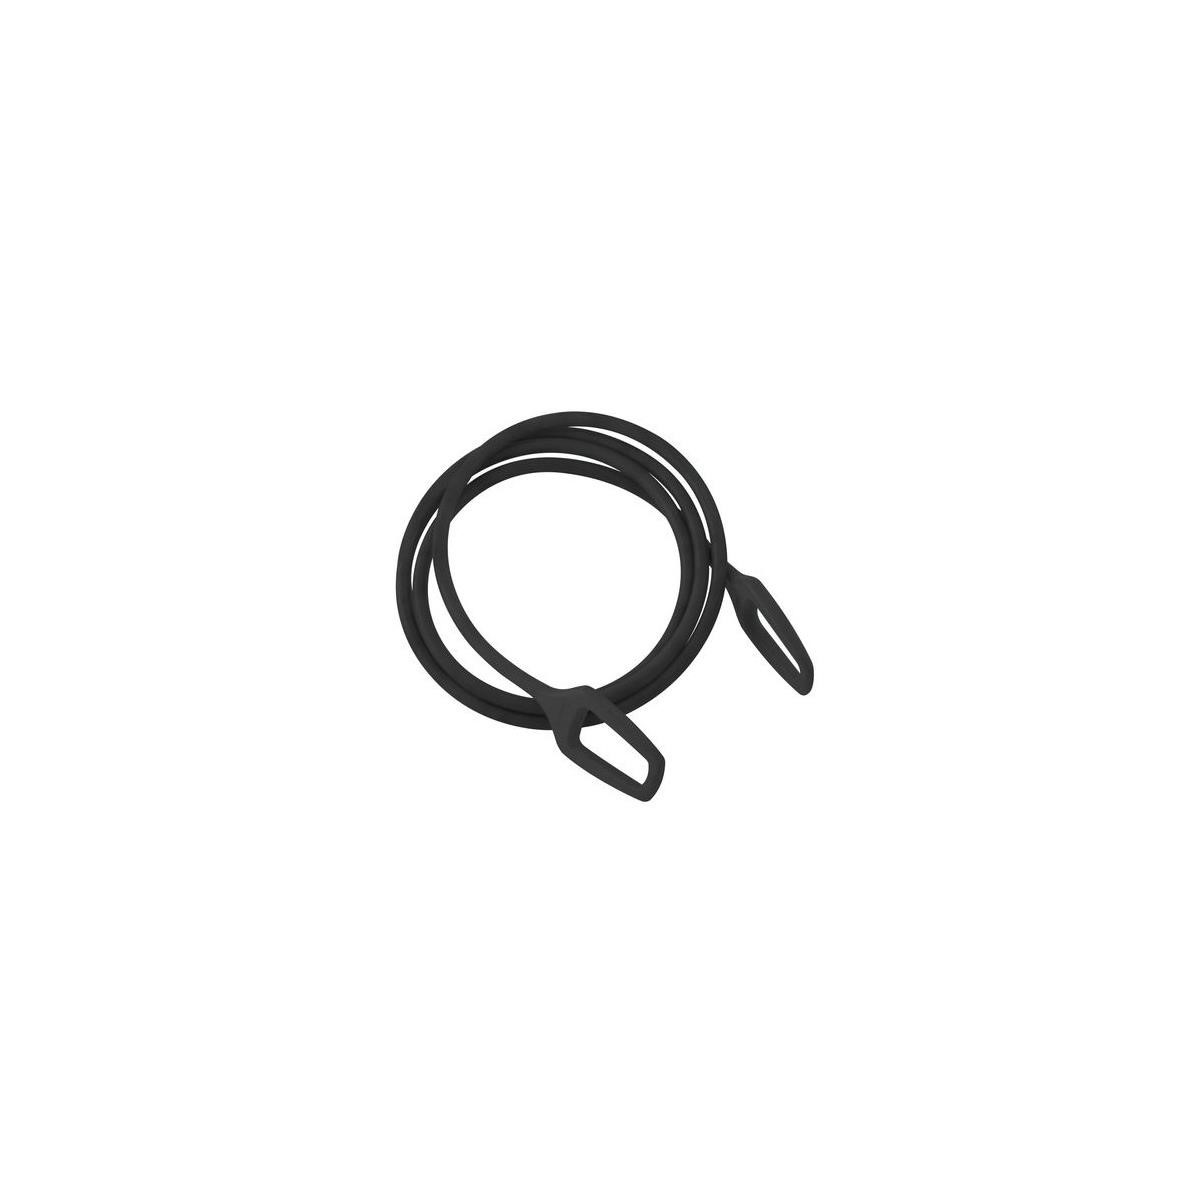 Knog Bike Cable Lock Ringmaster Black, 2.2 m